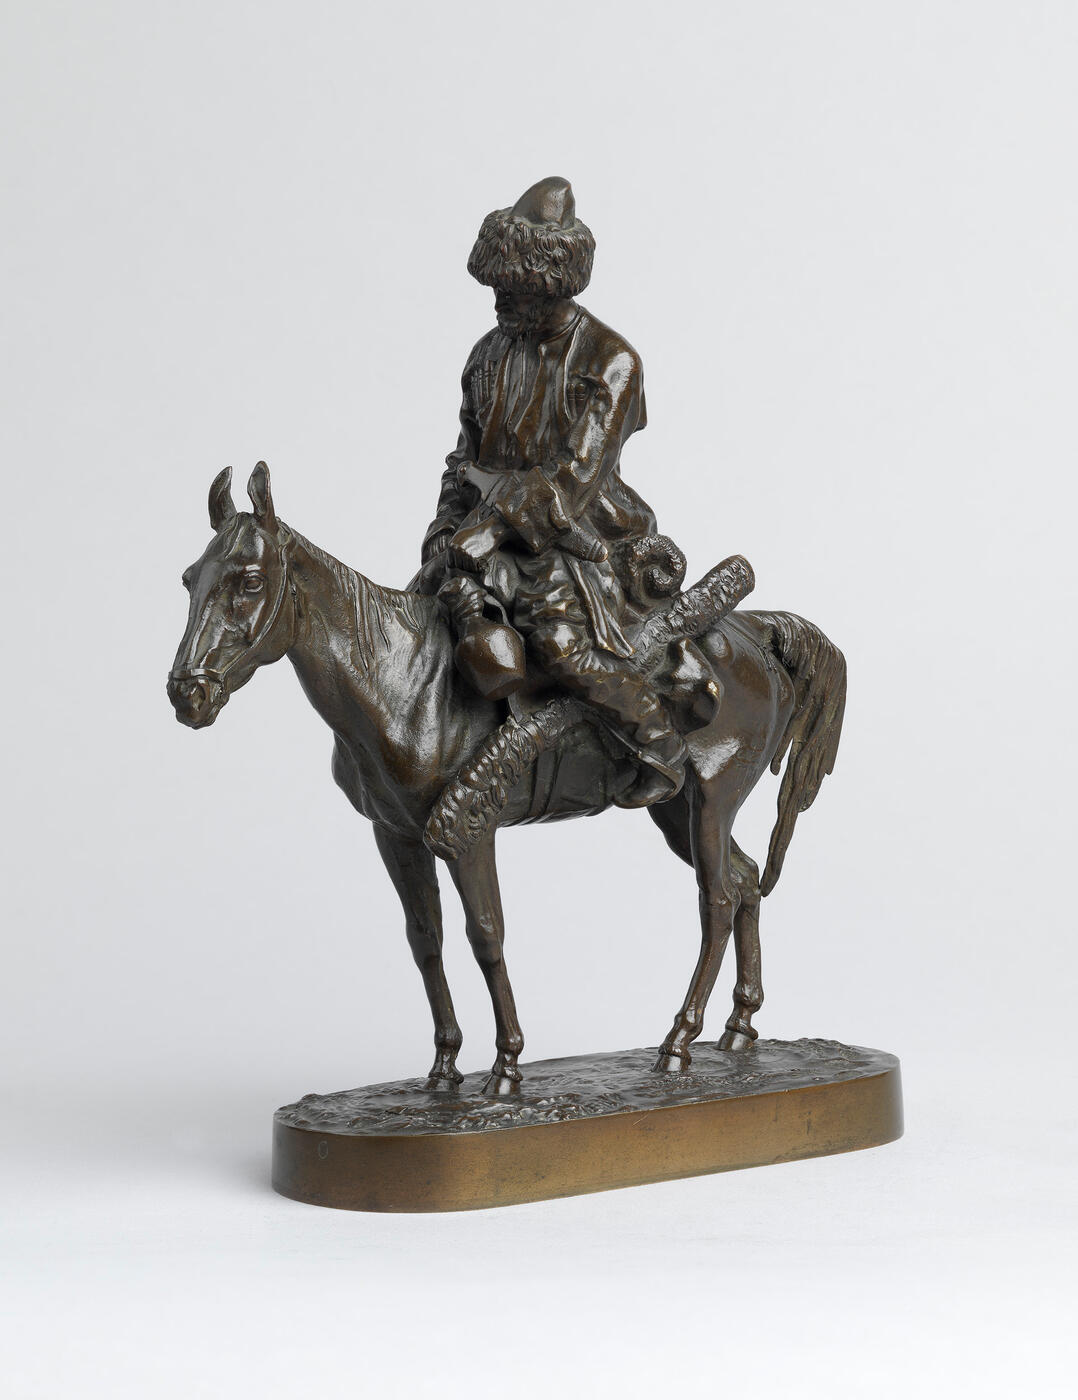 A Cossack on Horseback